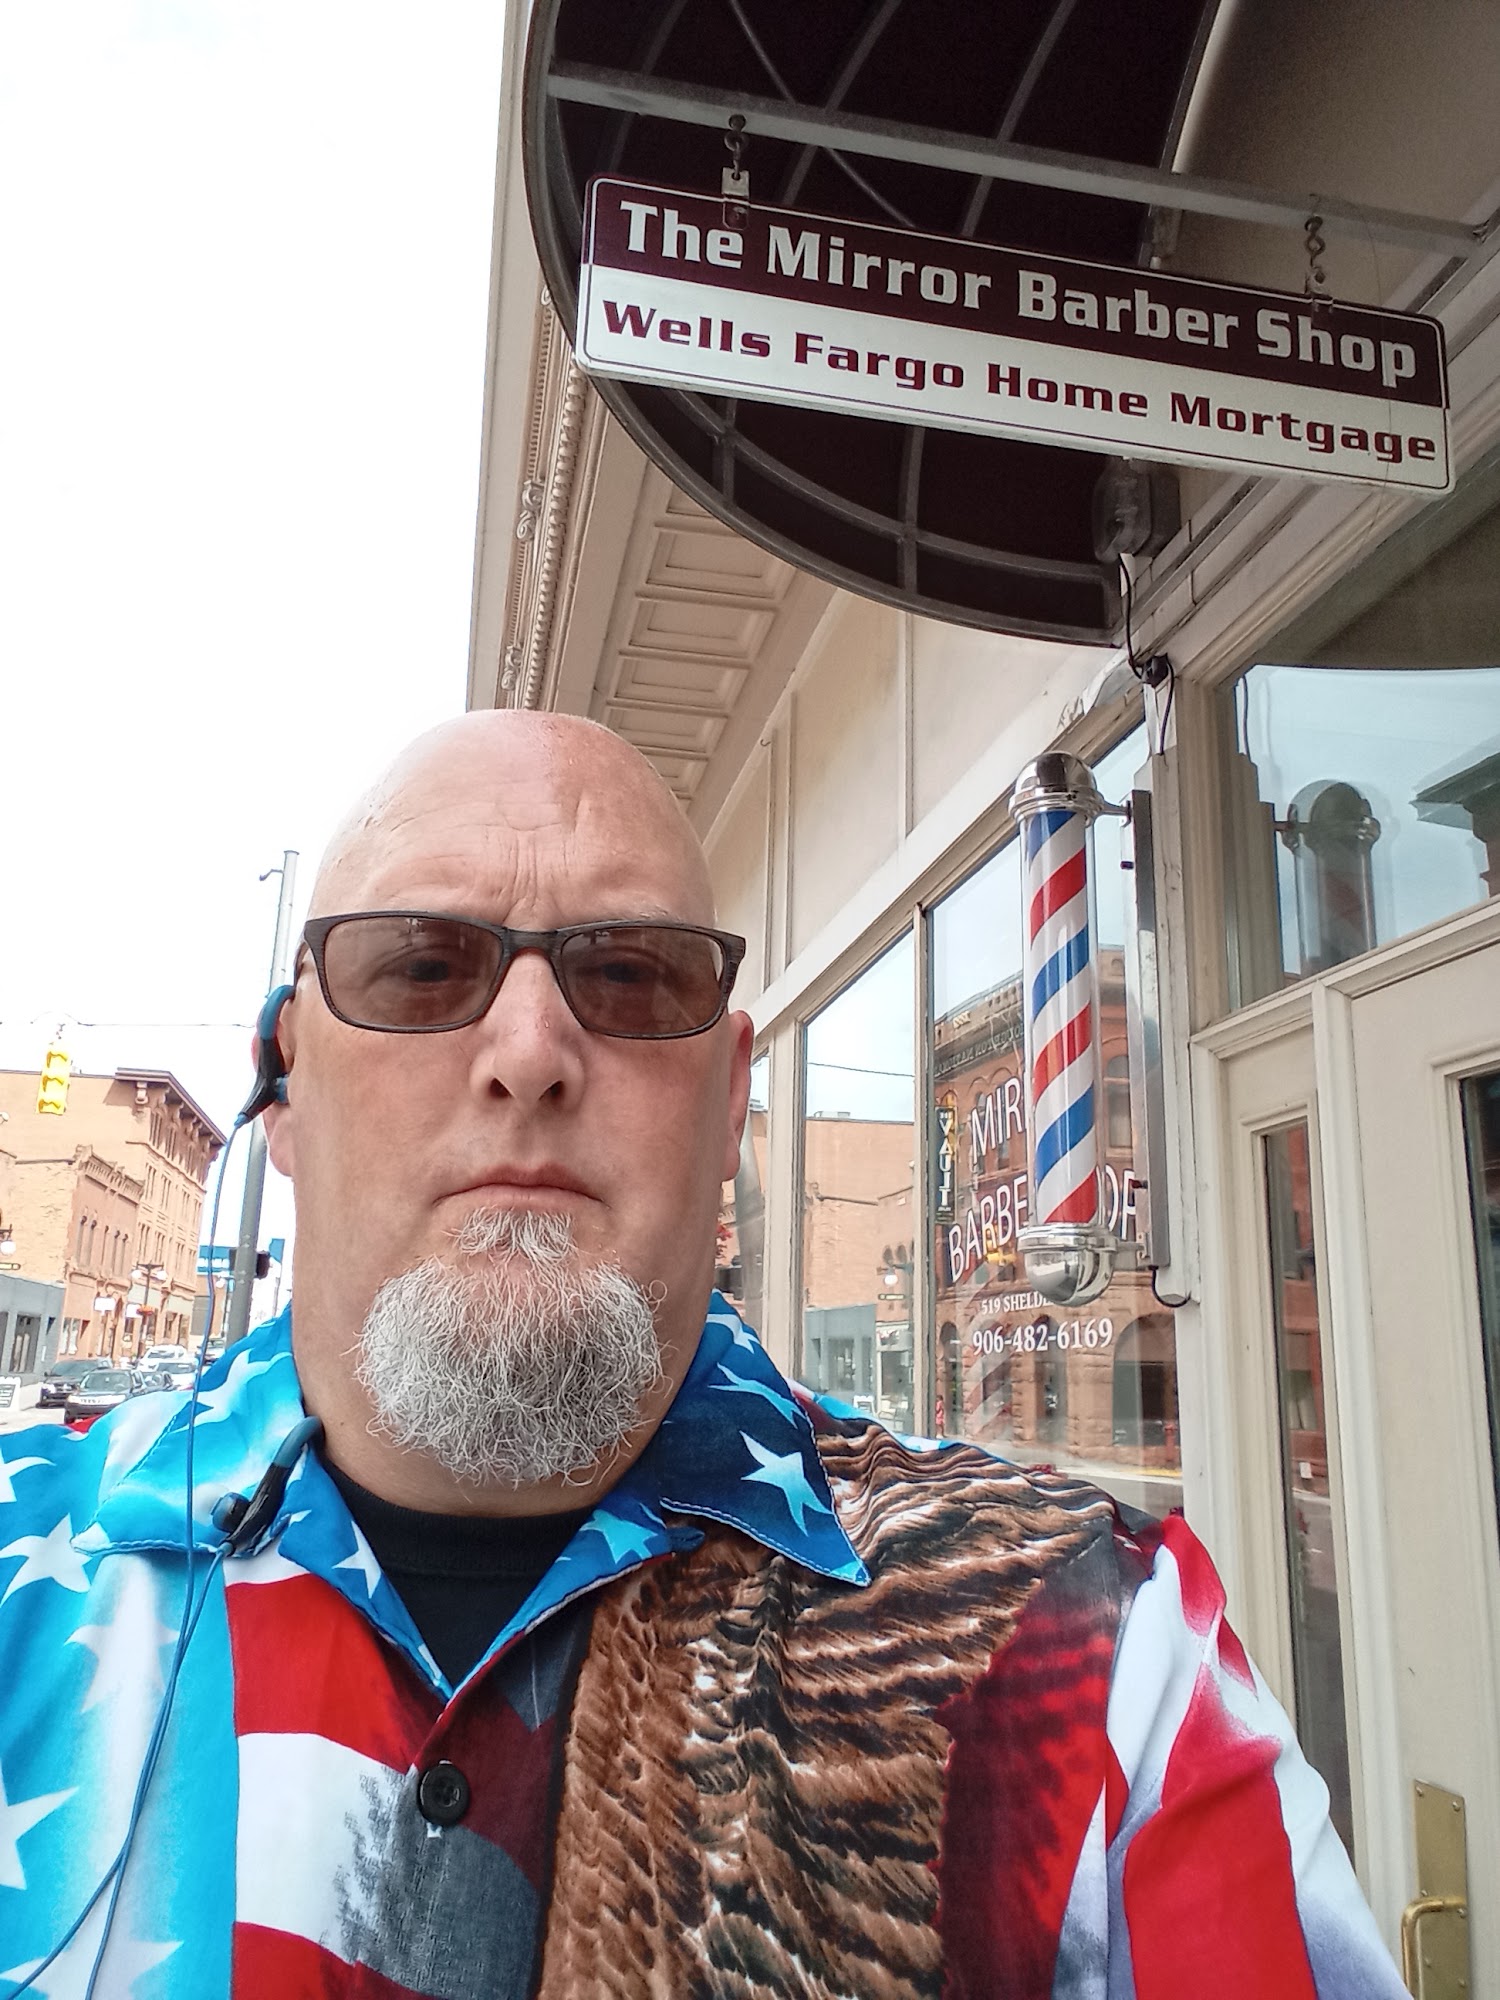 The Mirror Barbershop 519 Shelden Ave, Houghton Michigan 49931